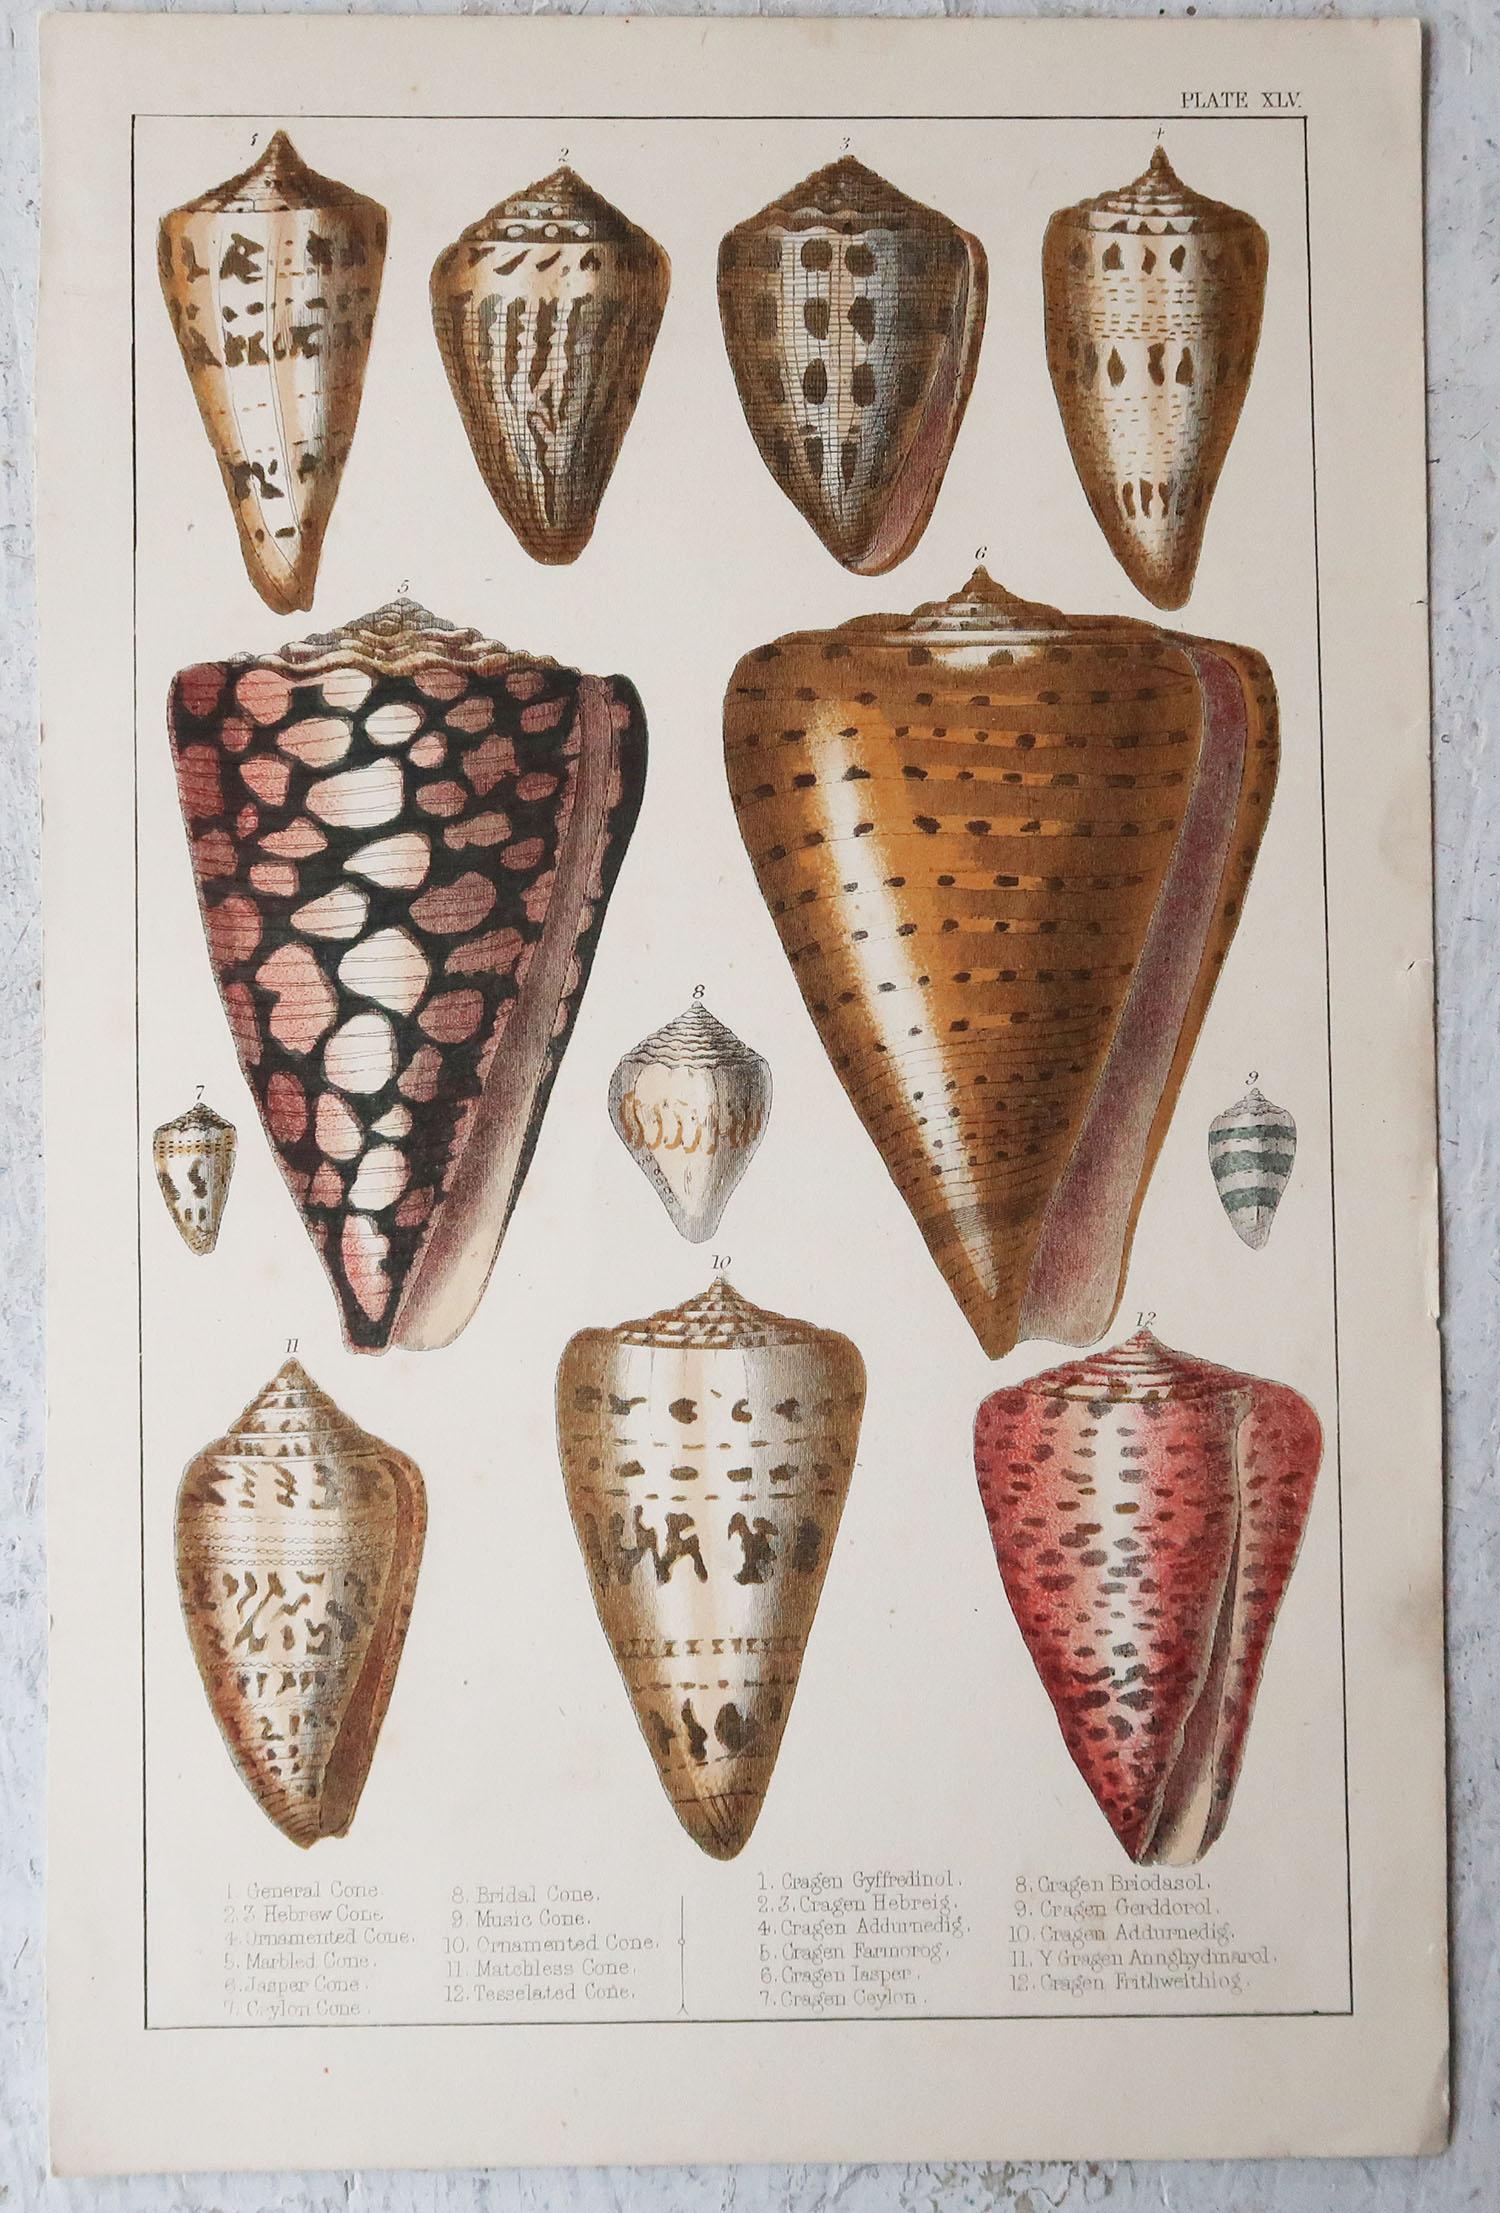 Folk Art Original Antique Print of Shells, 1847 'Unframed'